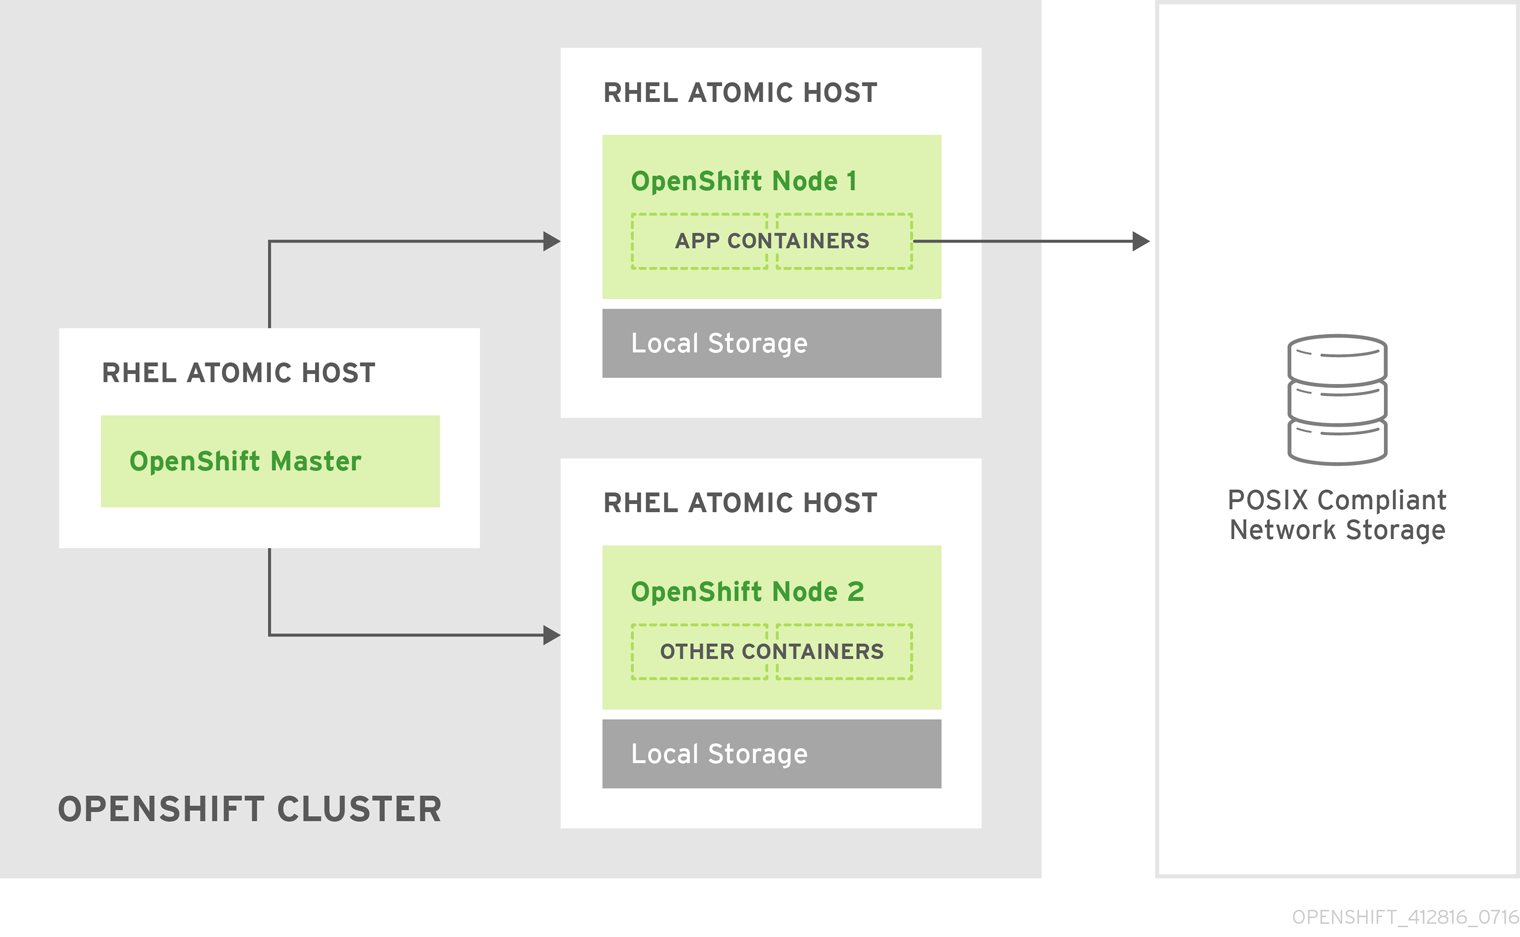 Architecture - Standalone Red Hat Gluster Storage Cluster Using OpenShift Container Platform's GlusterFS Volume Plug-in